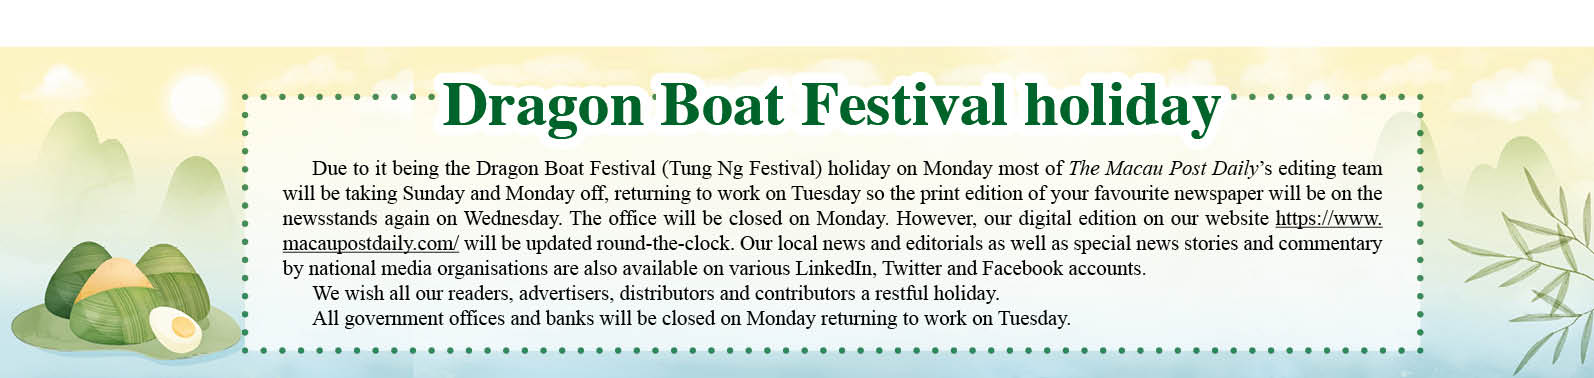 Dragon Boat Festival holiday